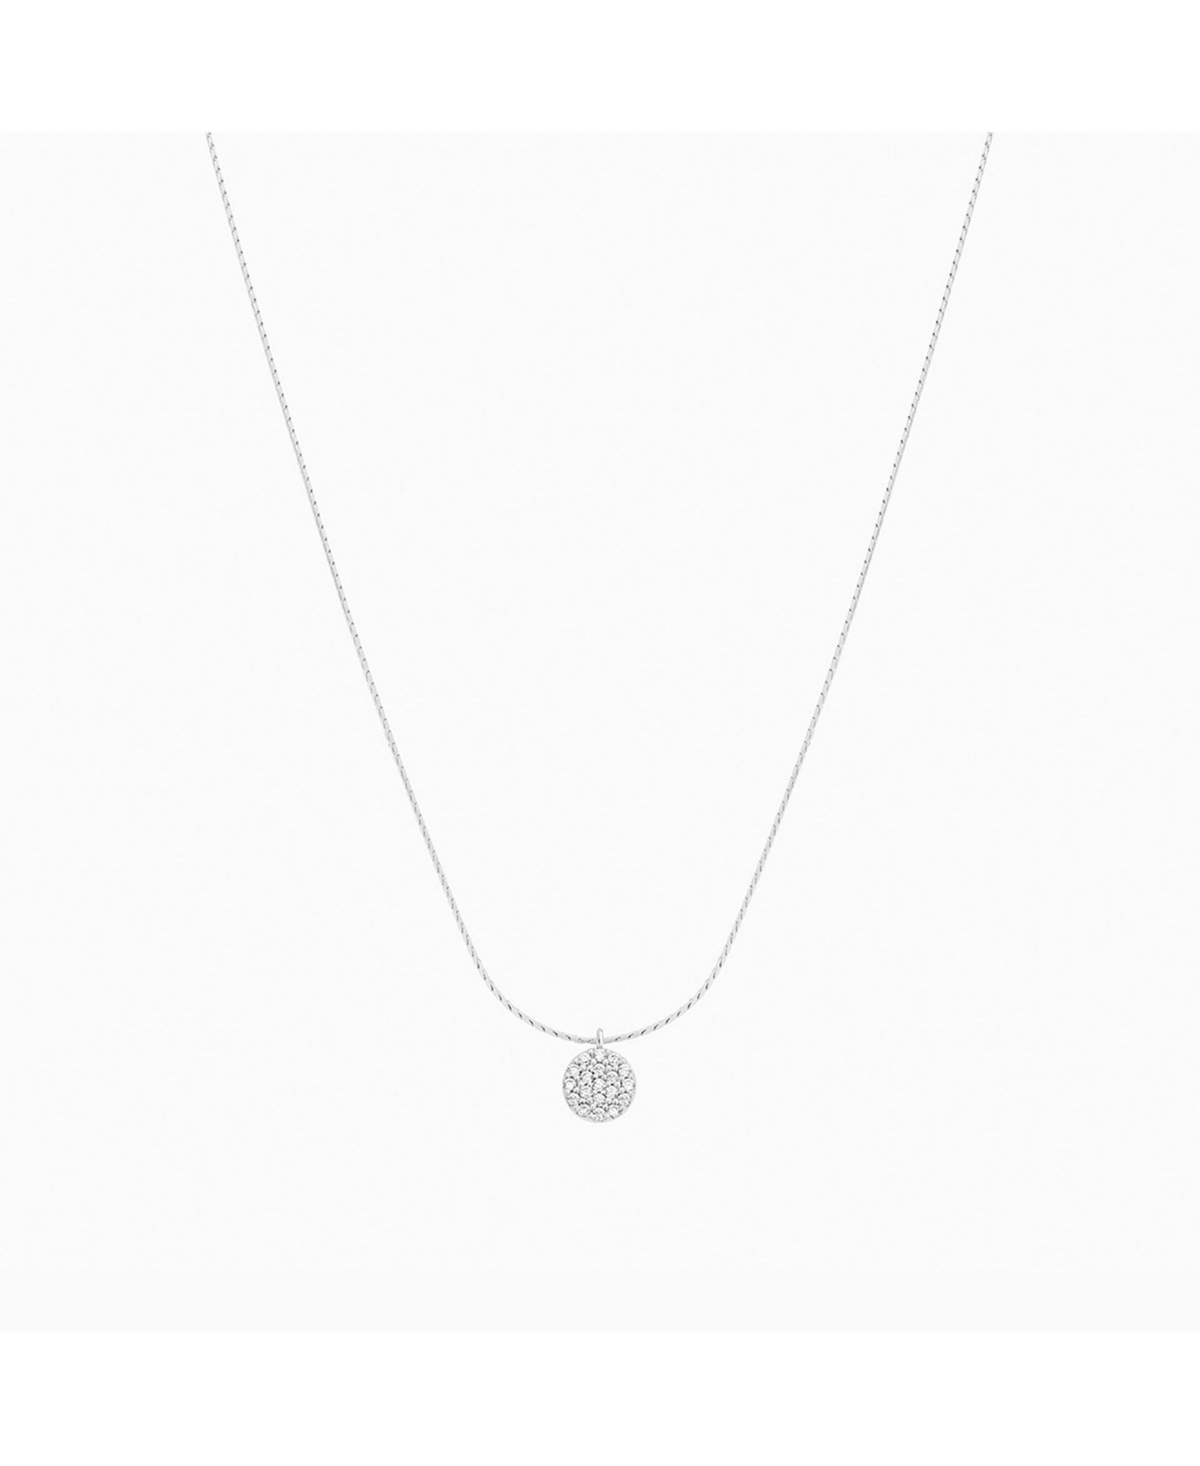 Blake Circle Pave Crystal Necklace - White gold